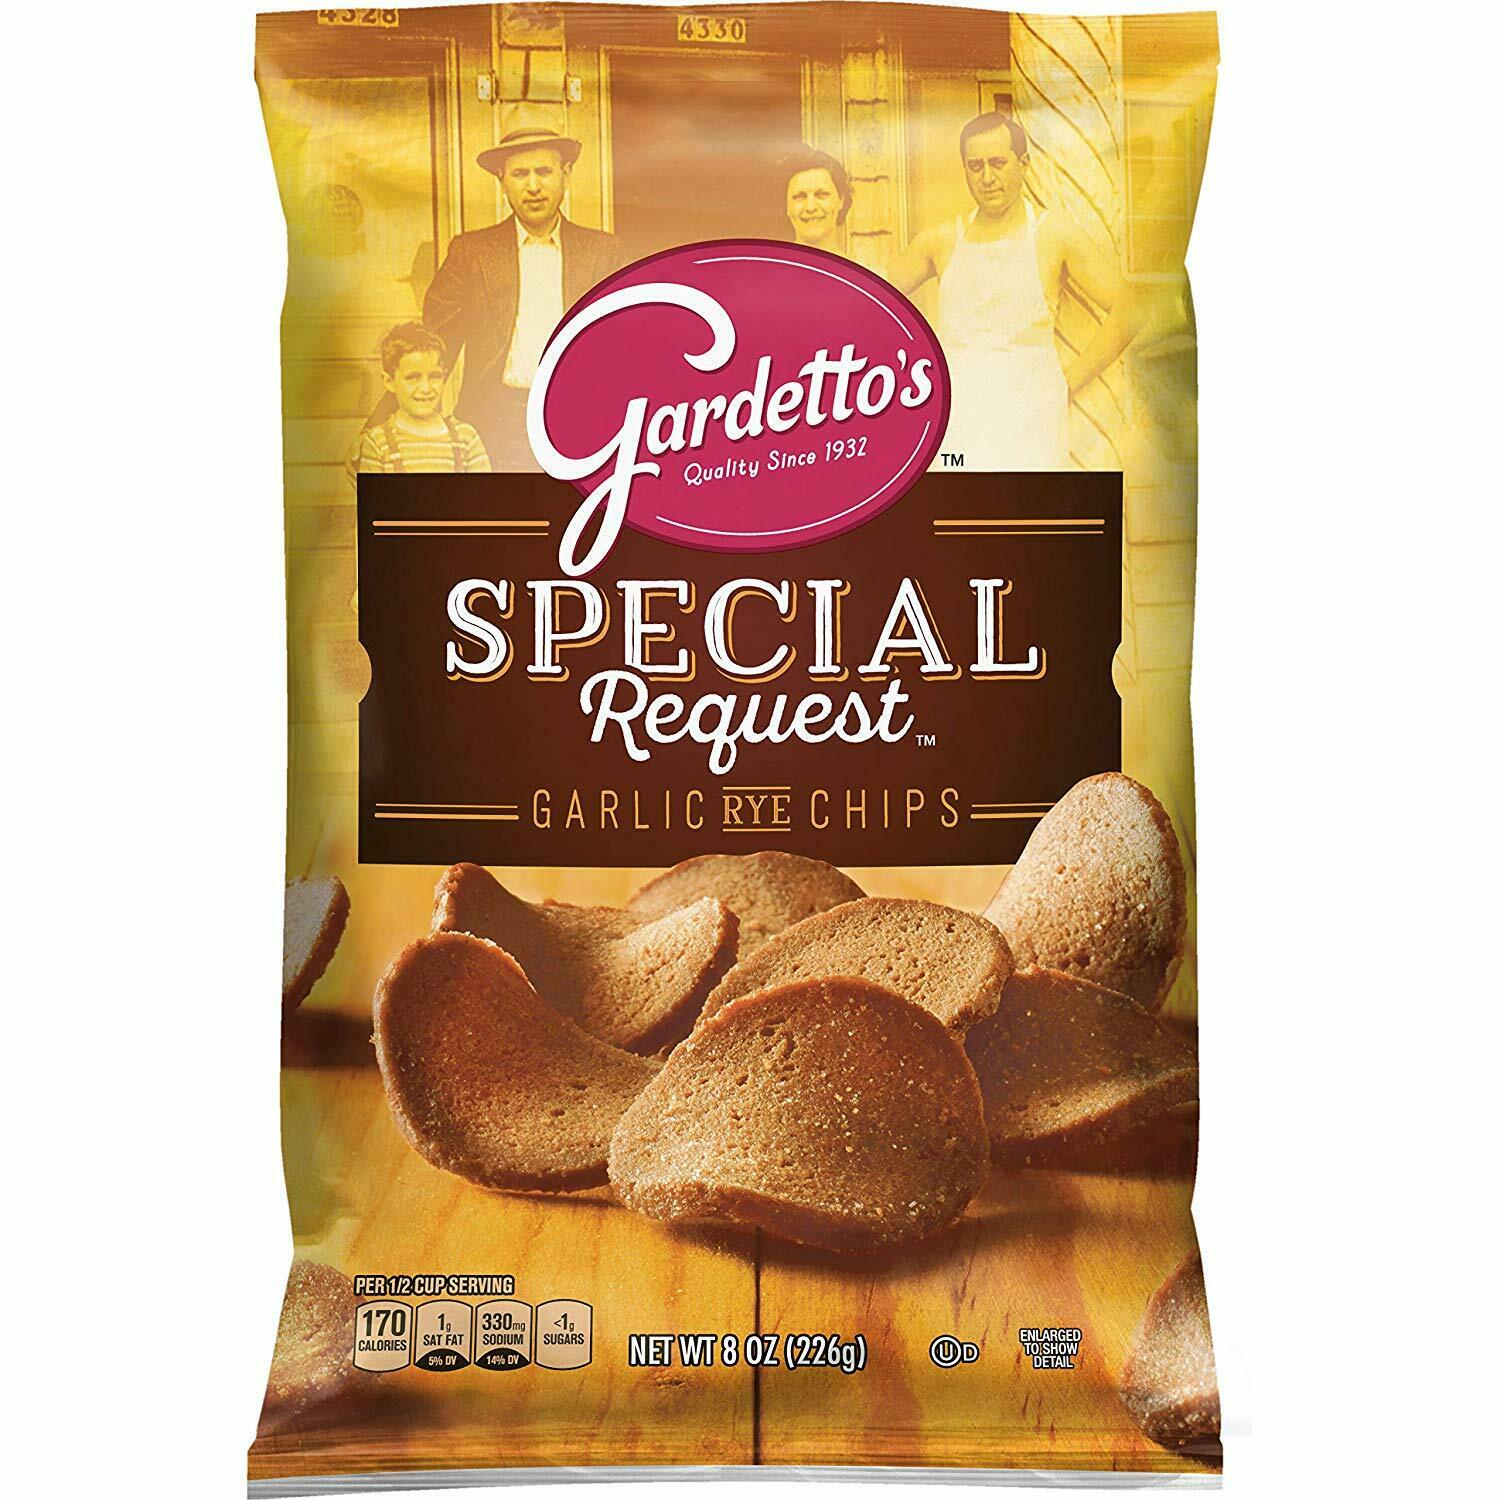 Gardetto's Special Request Garlic Rye Chips 8oz